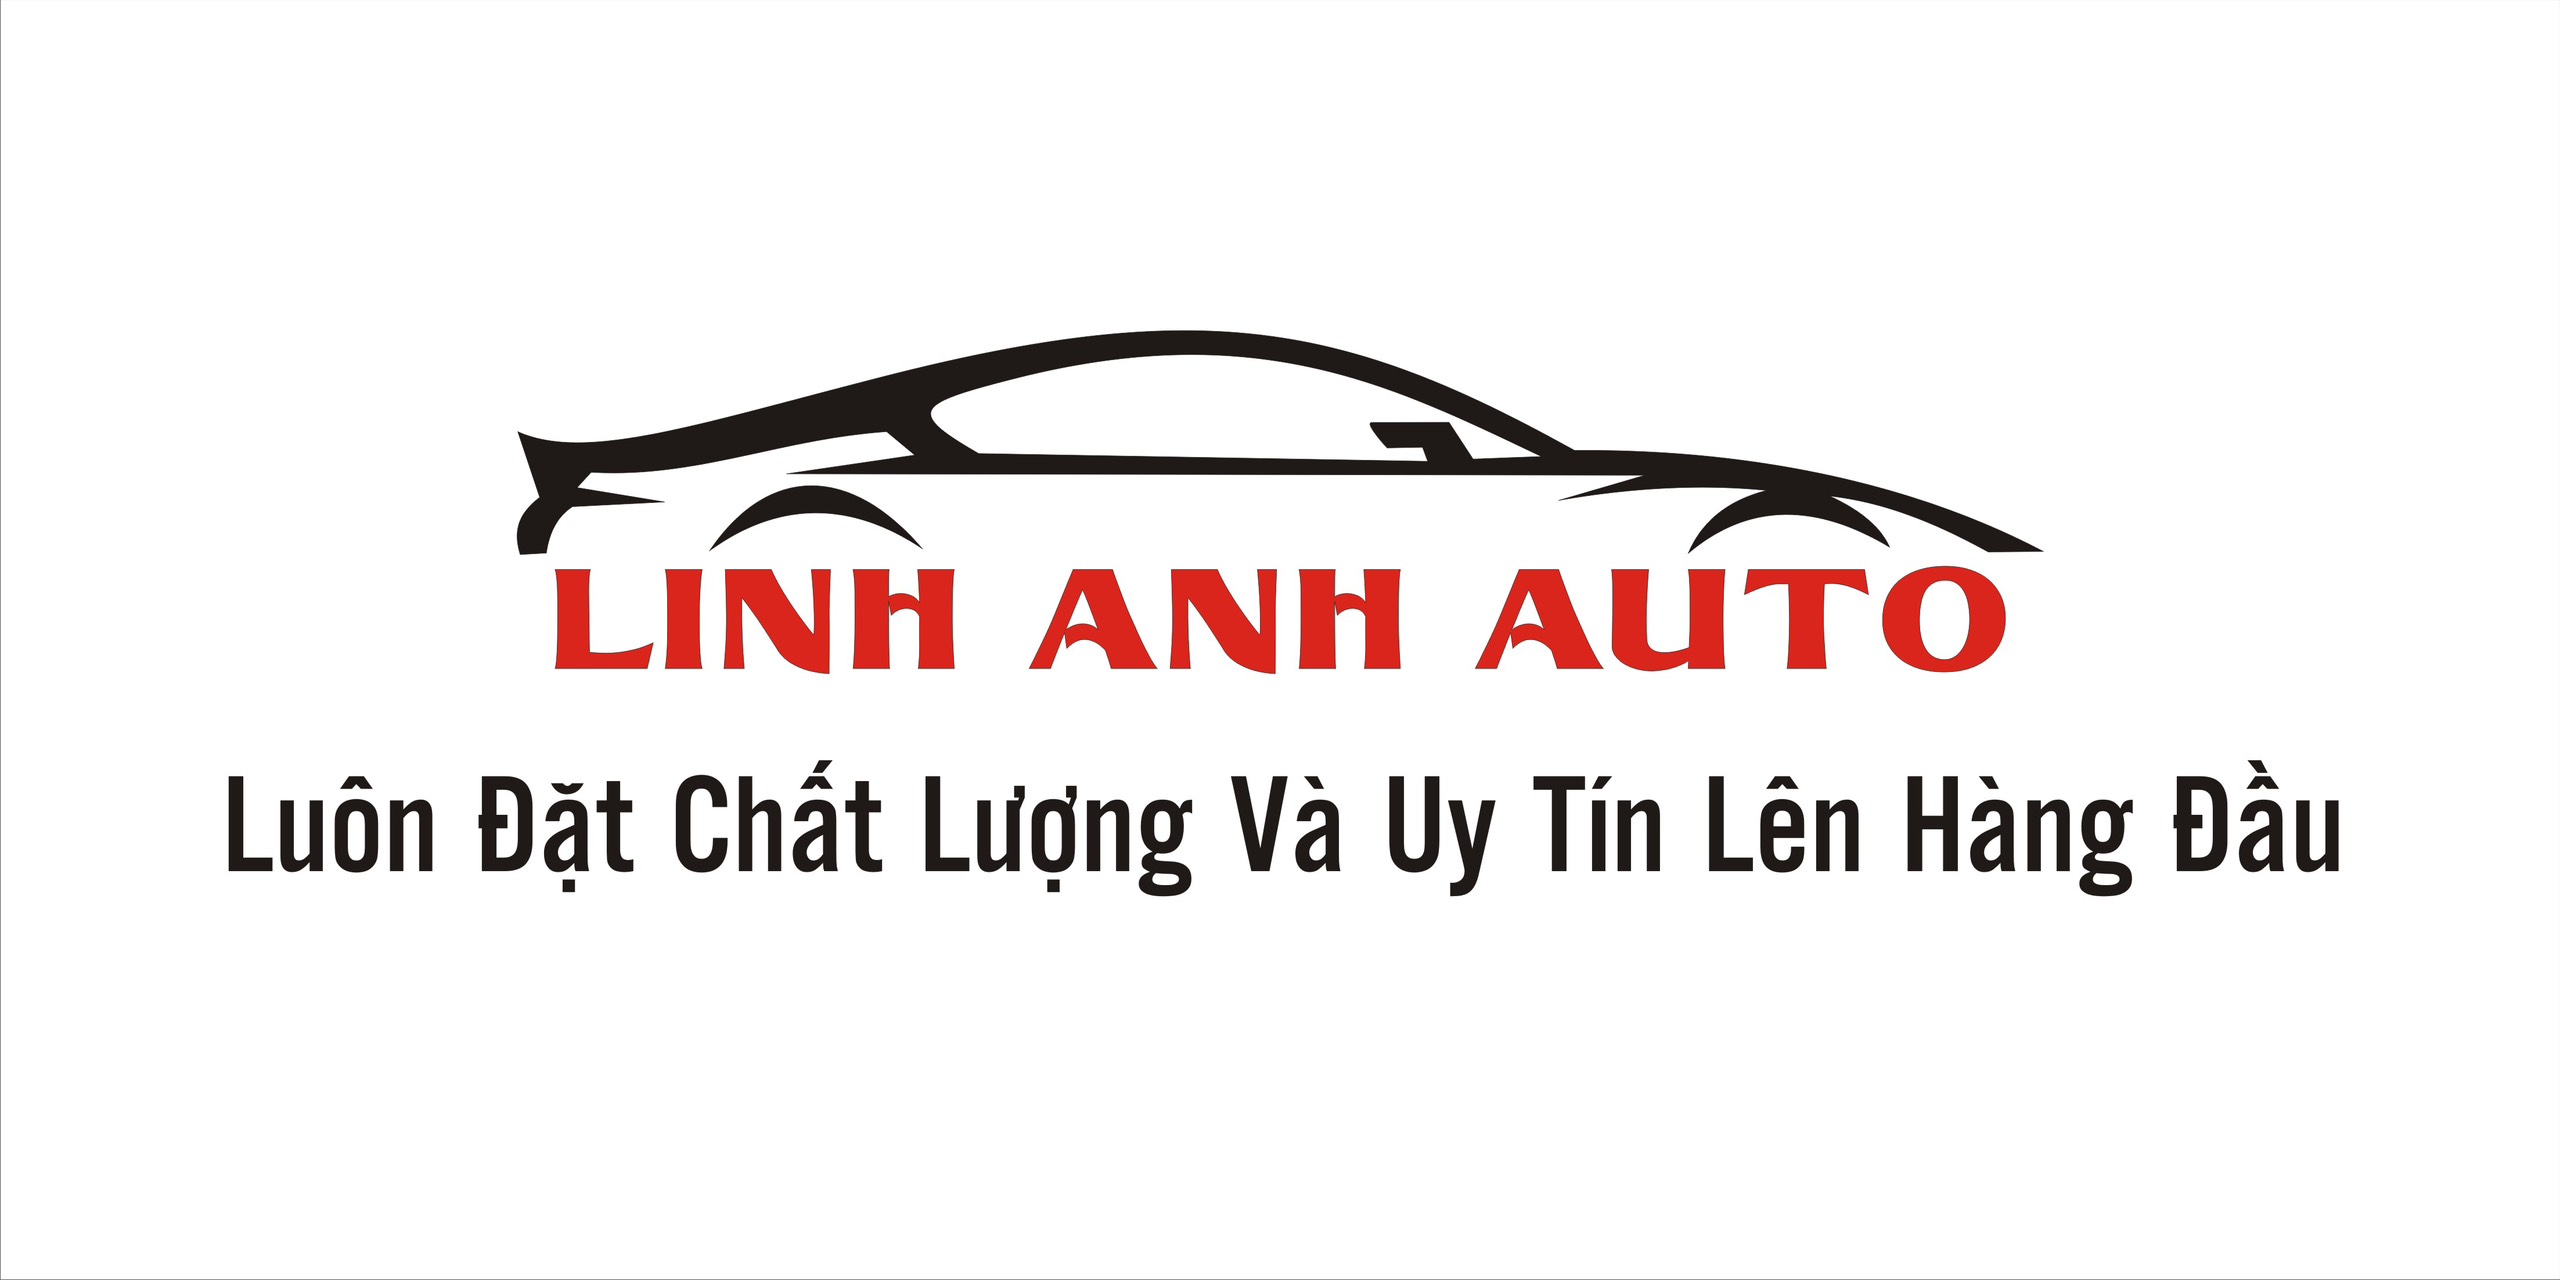 Linh Anh Auto